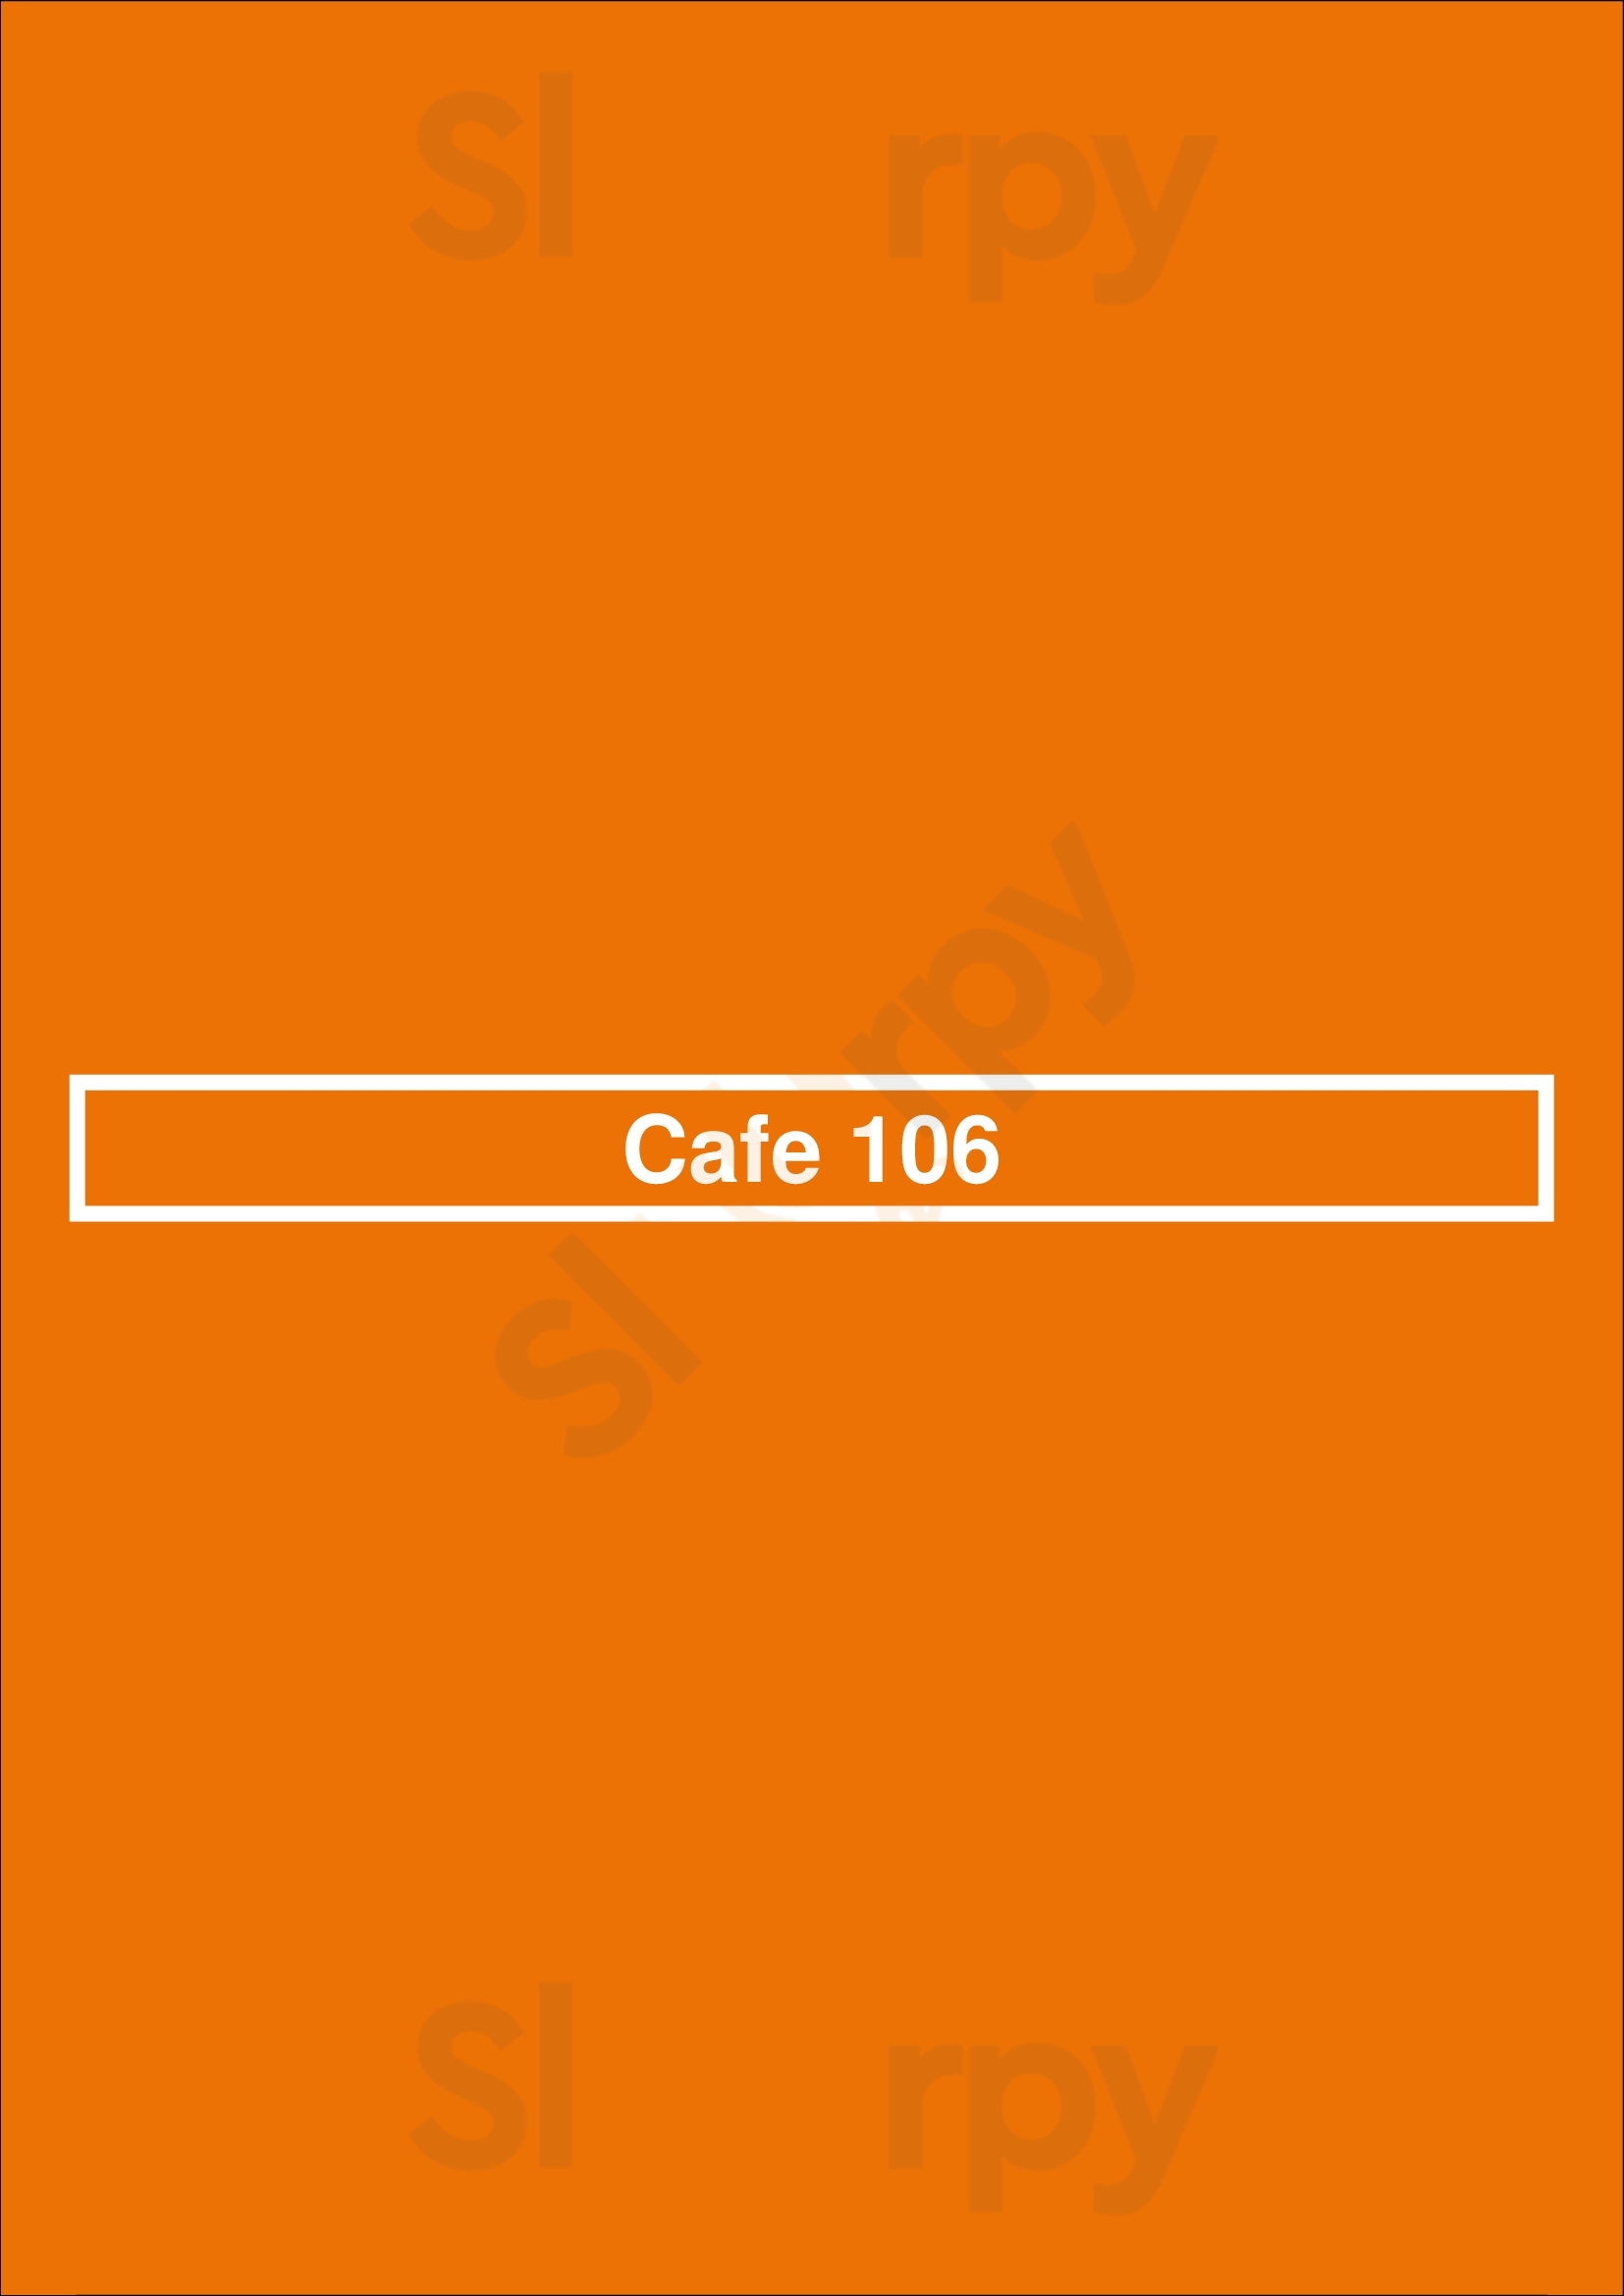 Cafe 106 Burnaby Menu - 1